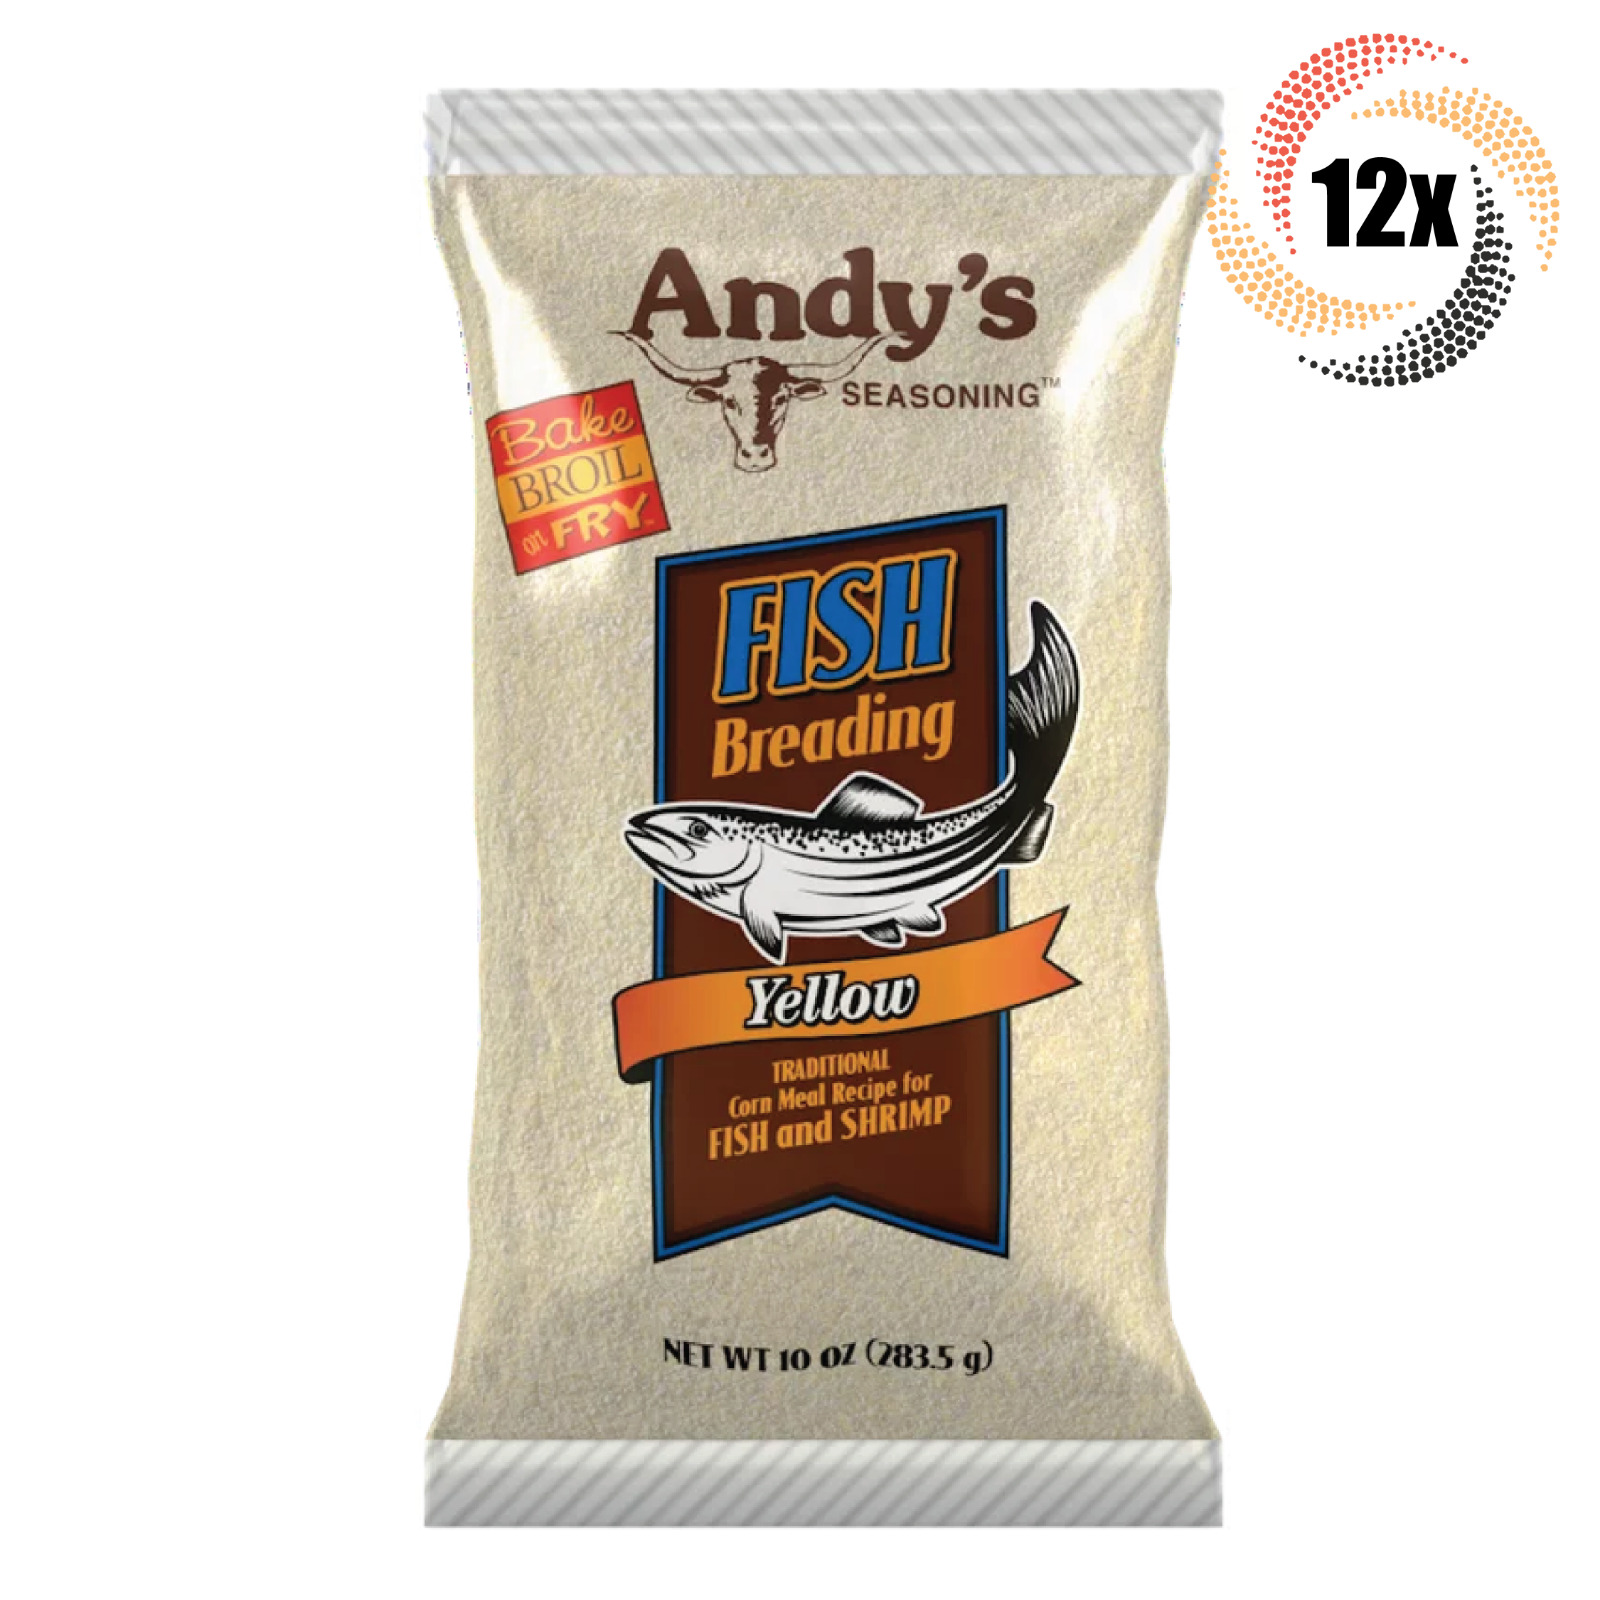 12x Bags Andy's Seasoning Yellow Fish & Shrimp Breading | 10oz | Fast Shipping